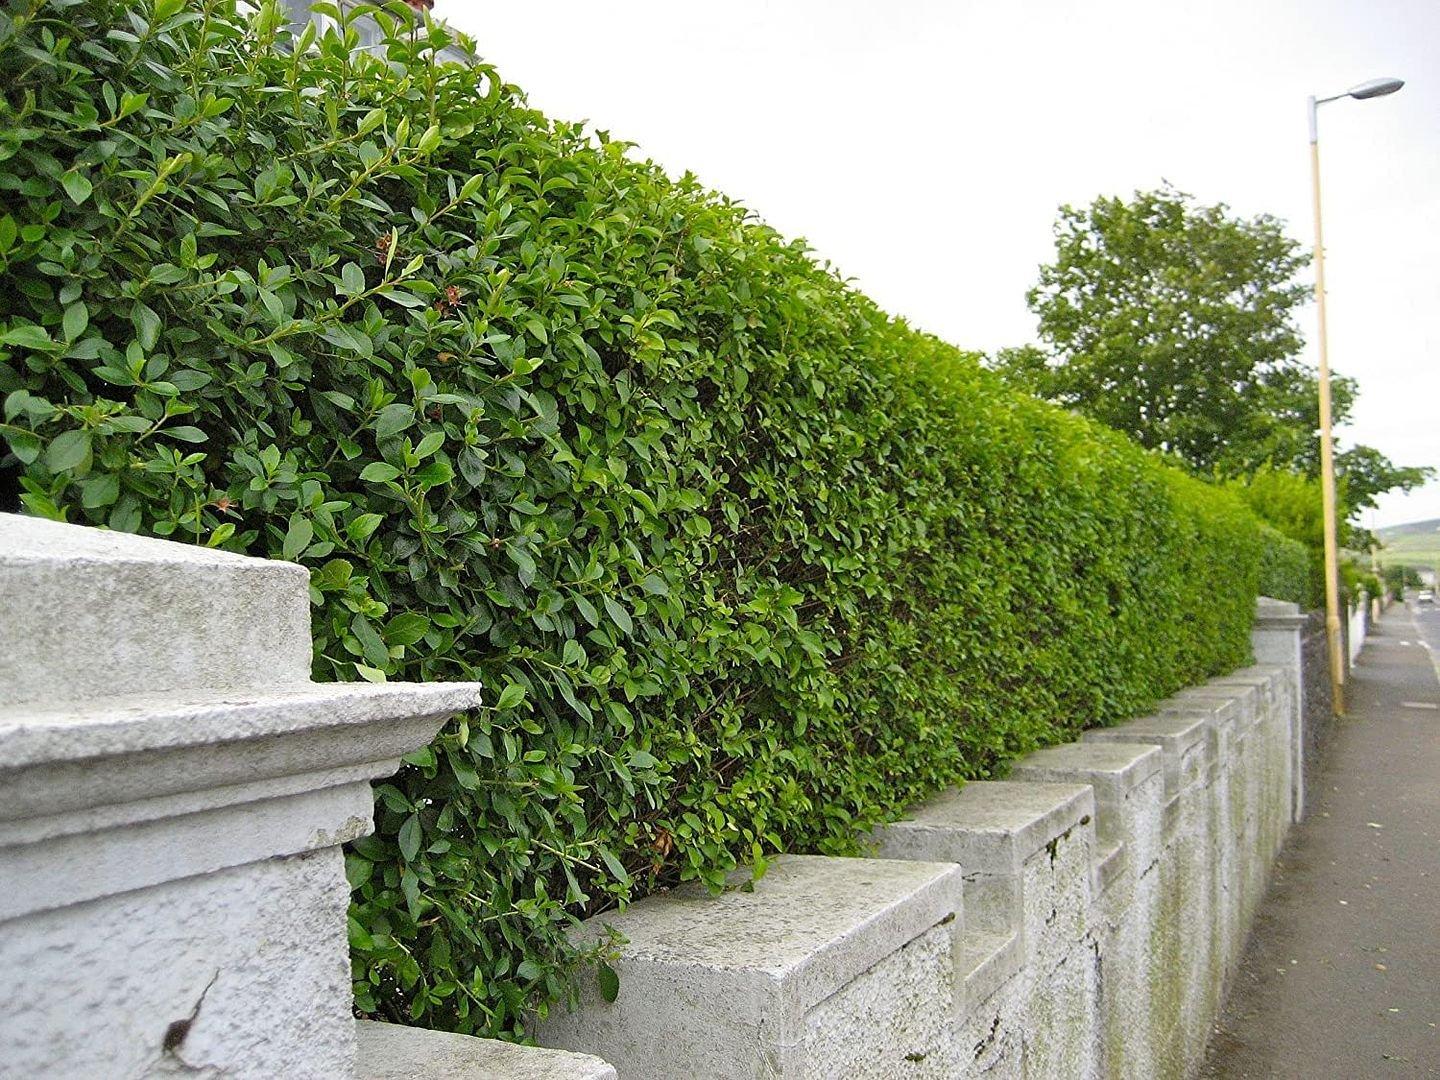 10 x 4-5ft Green Privet (Ligustrum Ovalifolium) Evergreen Bare Root Hedging Plants